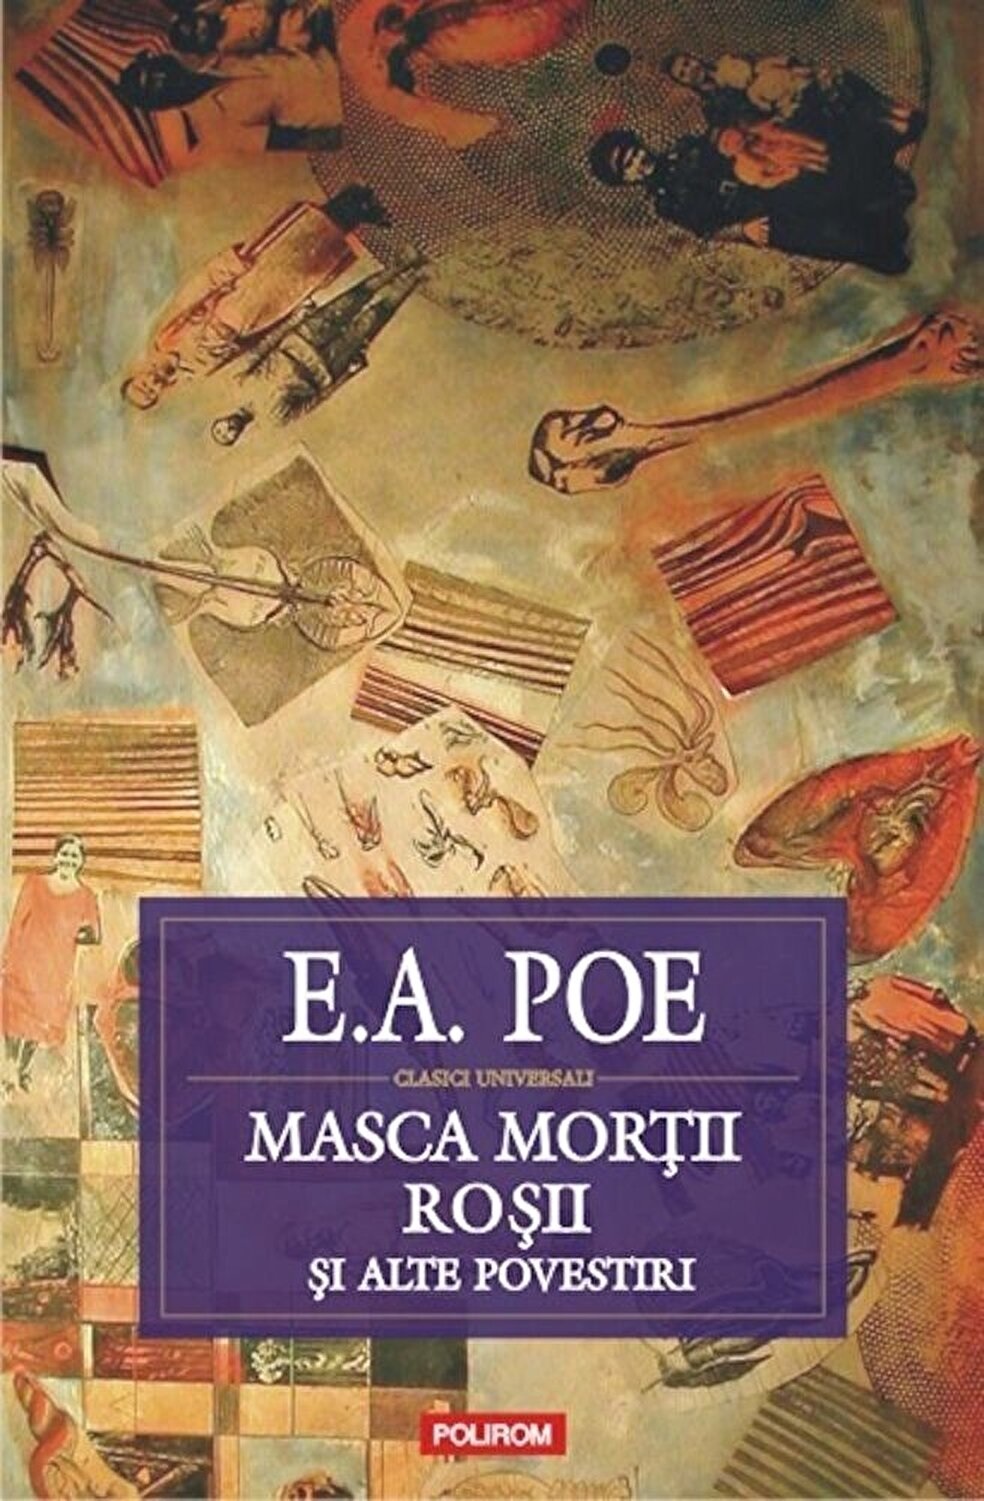 Masca Mortii Rosii si alte povestiri | Edgar Allan Poe carturesti.ro poza bestsellers.ro